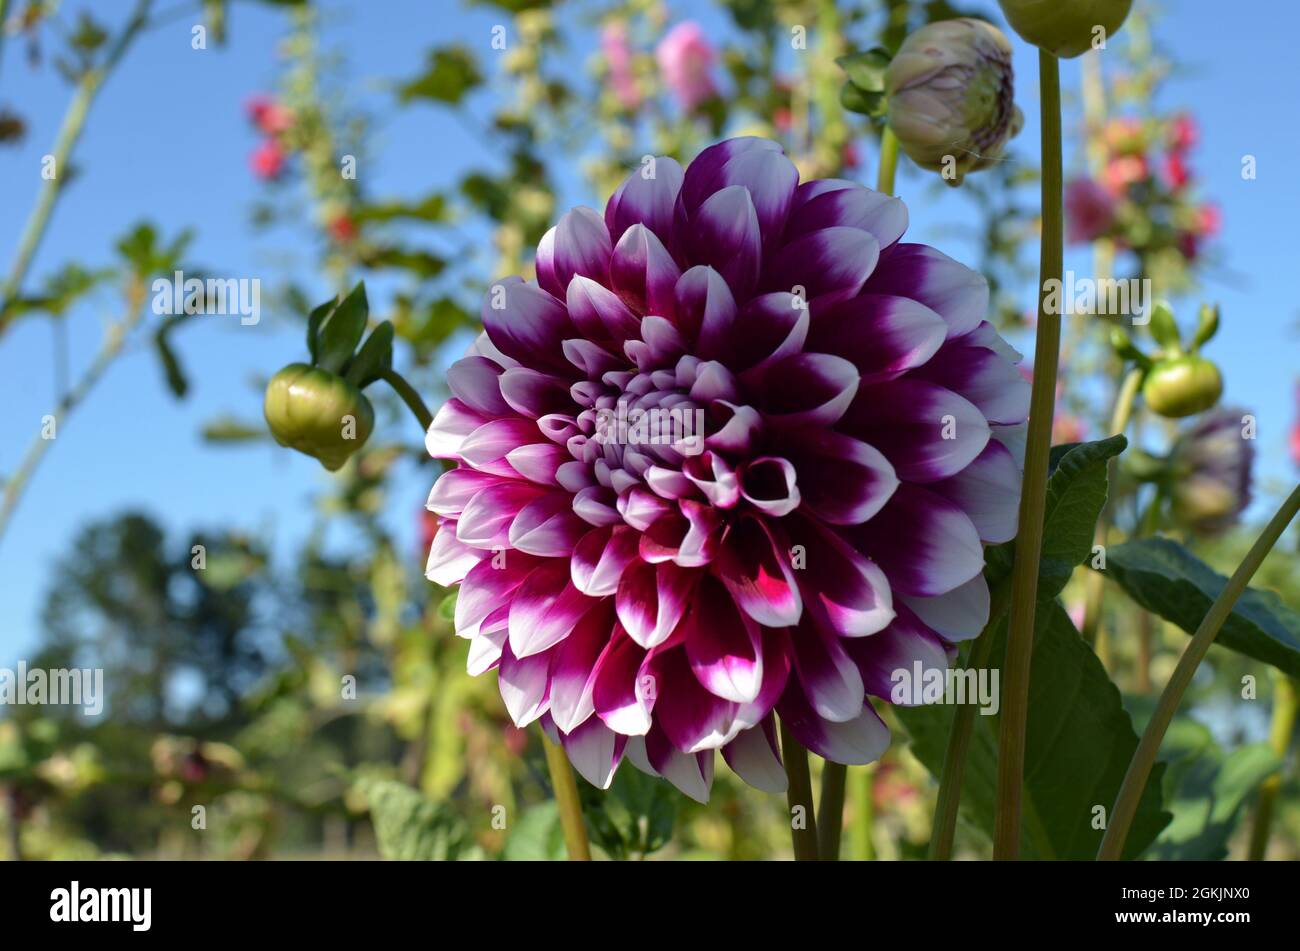 Purple And White 'Edinburgh' Dahlia Flower. Stock Photo